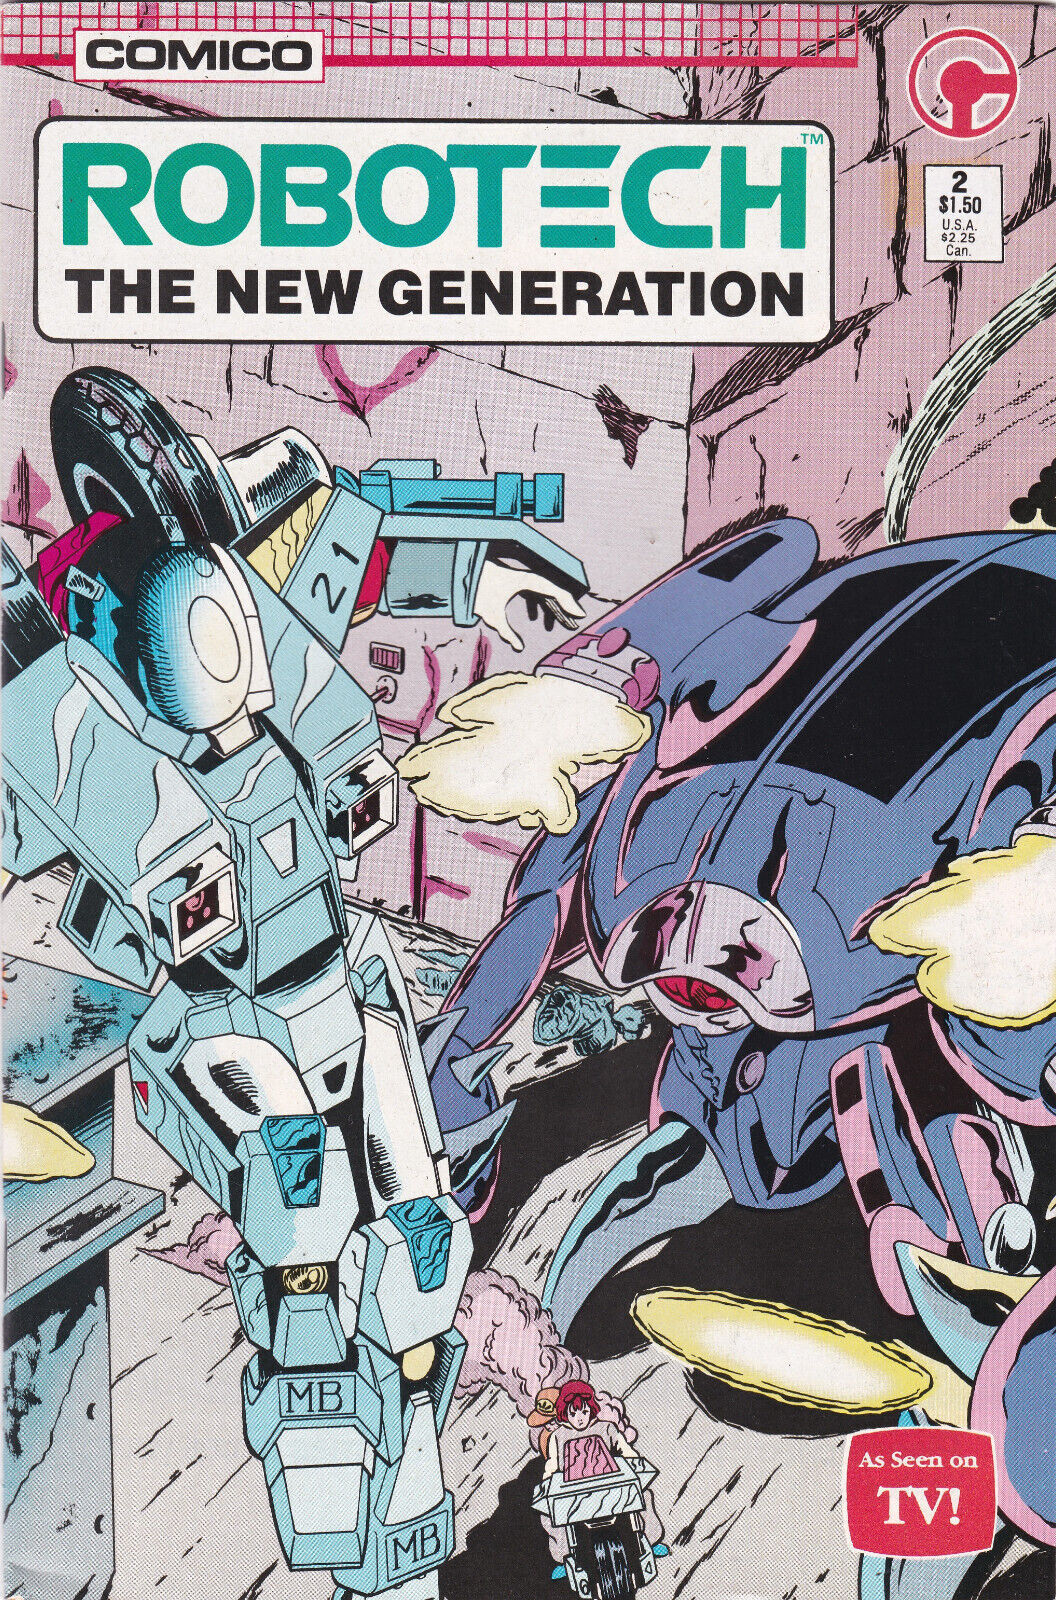 Robotech: The New Generation #2, (1985-1988) Comico, High Grade